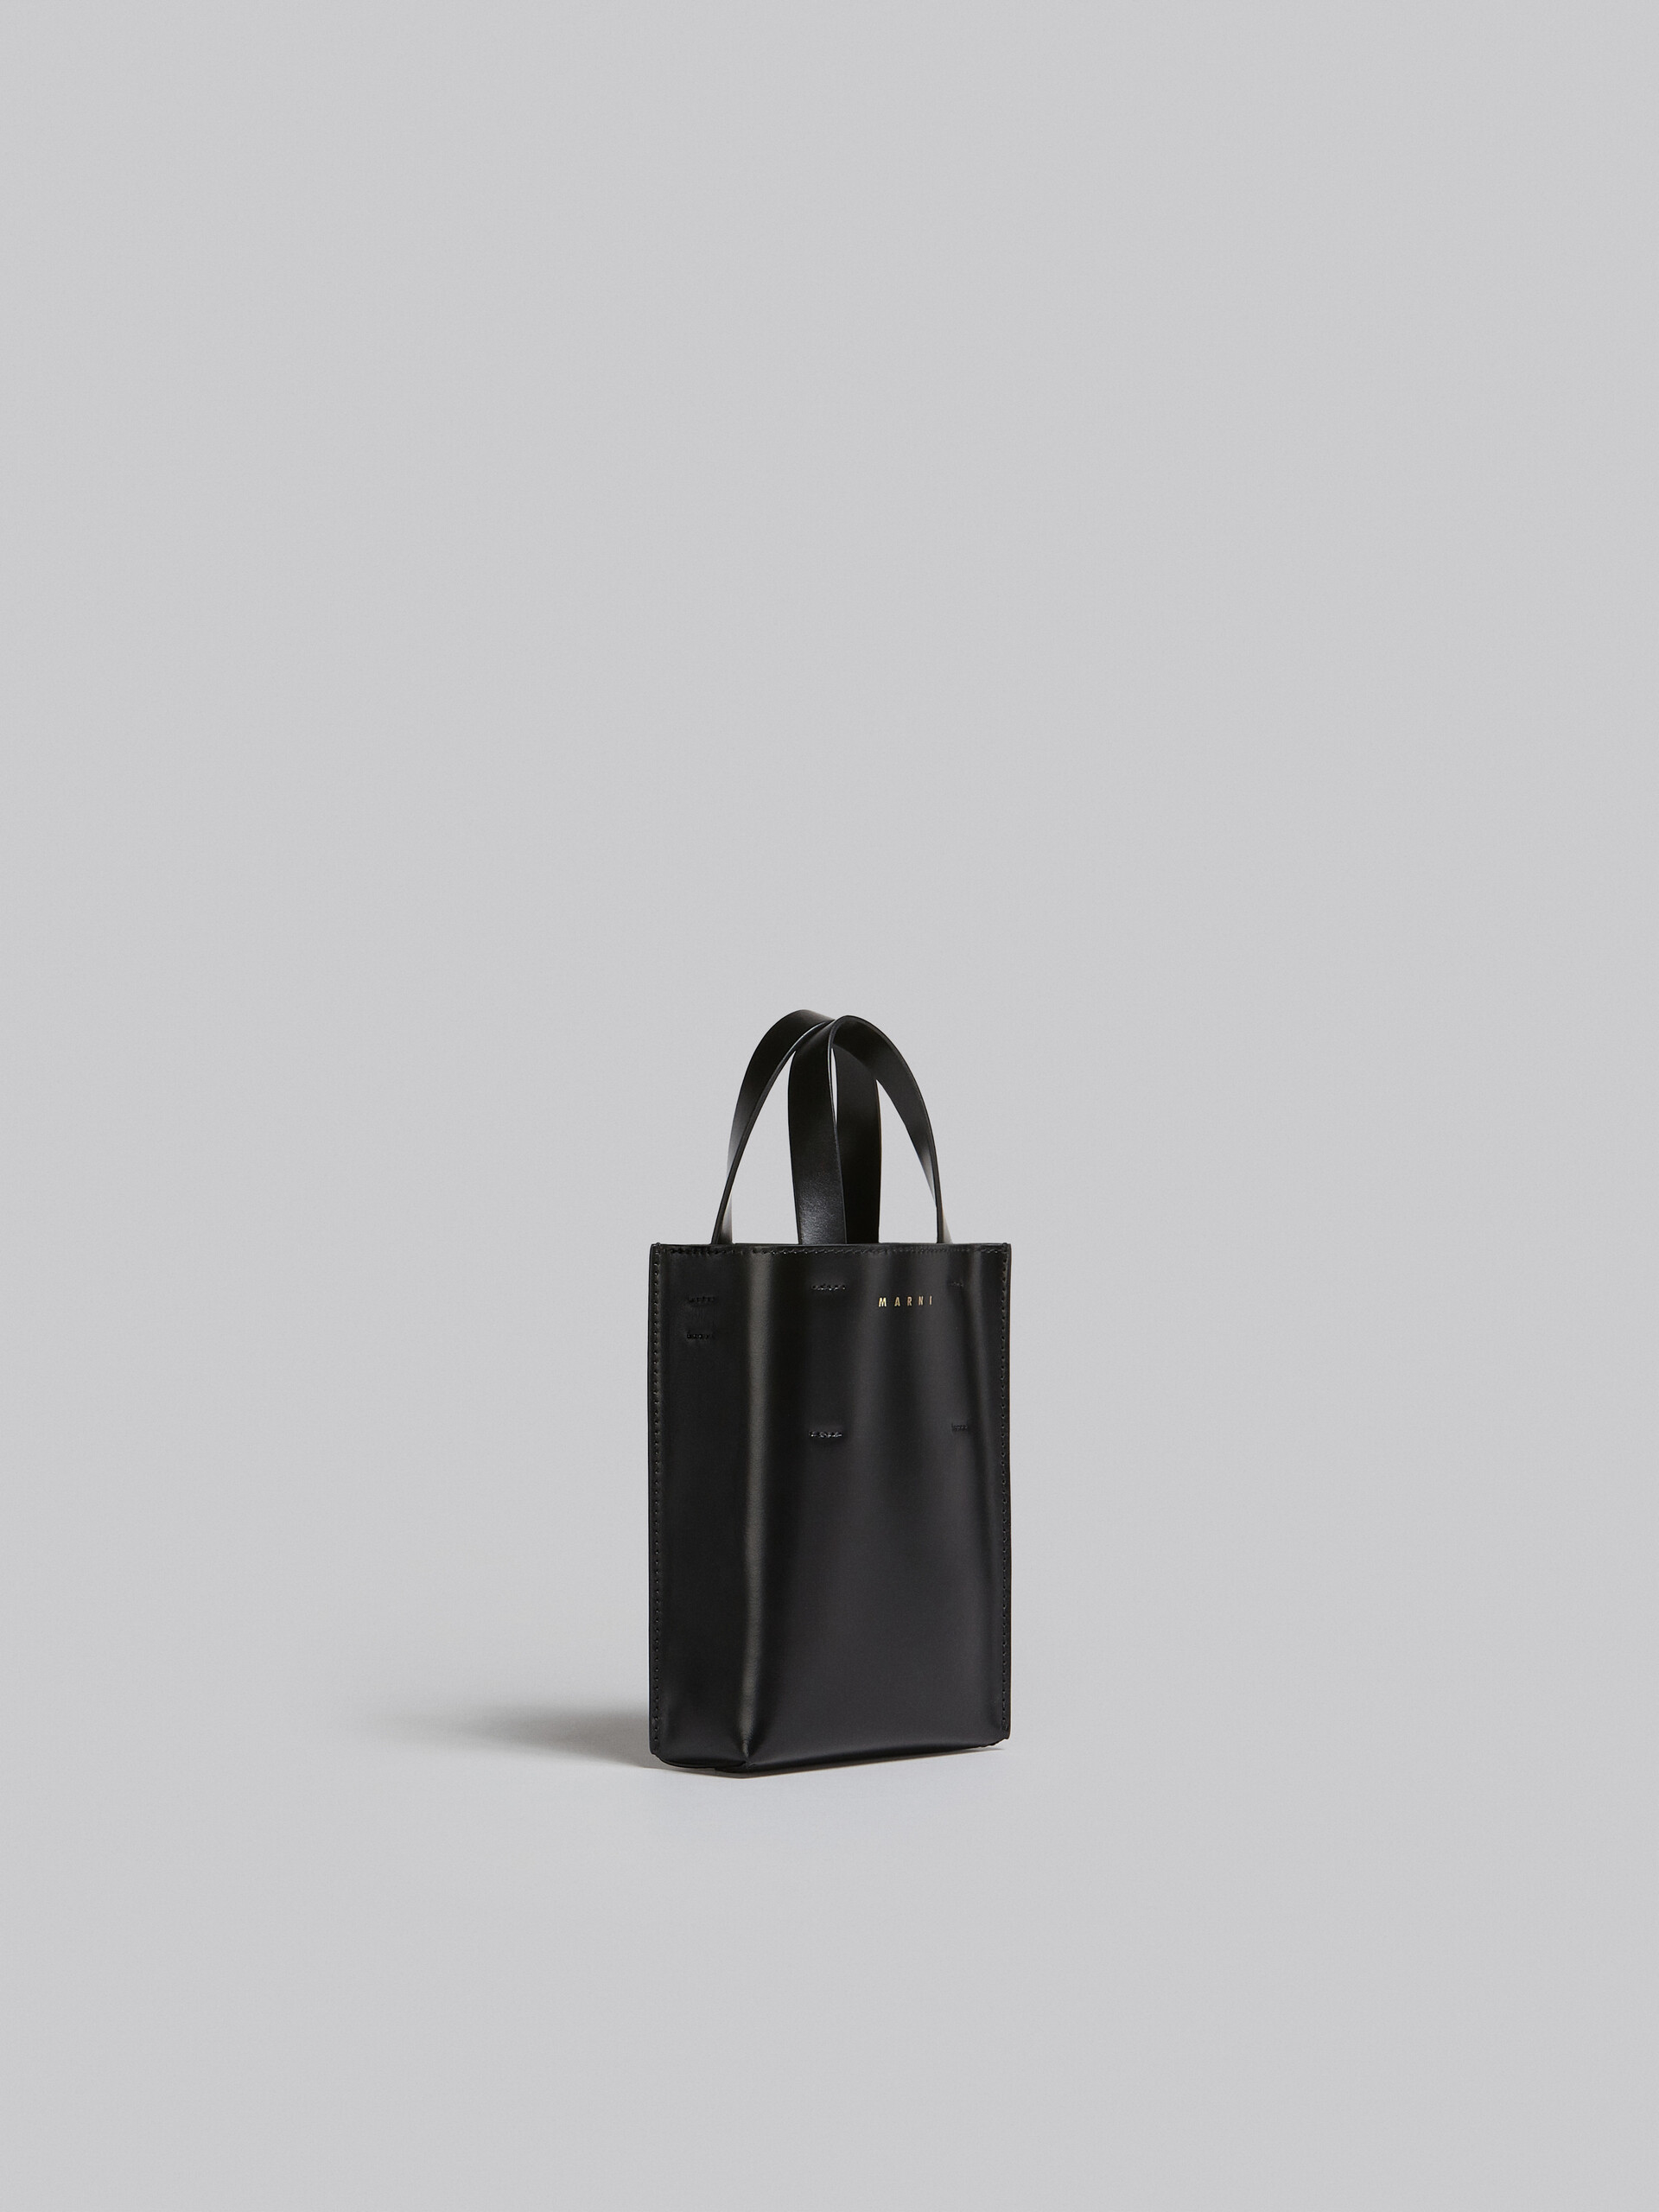 MUSEO bag nano in pelle lucida nera - Borse shopping - Image 5